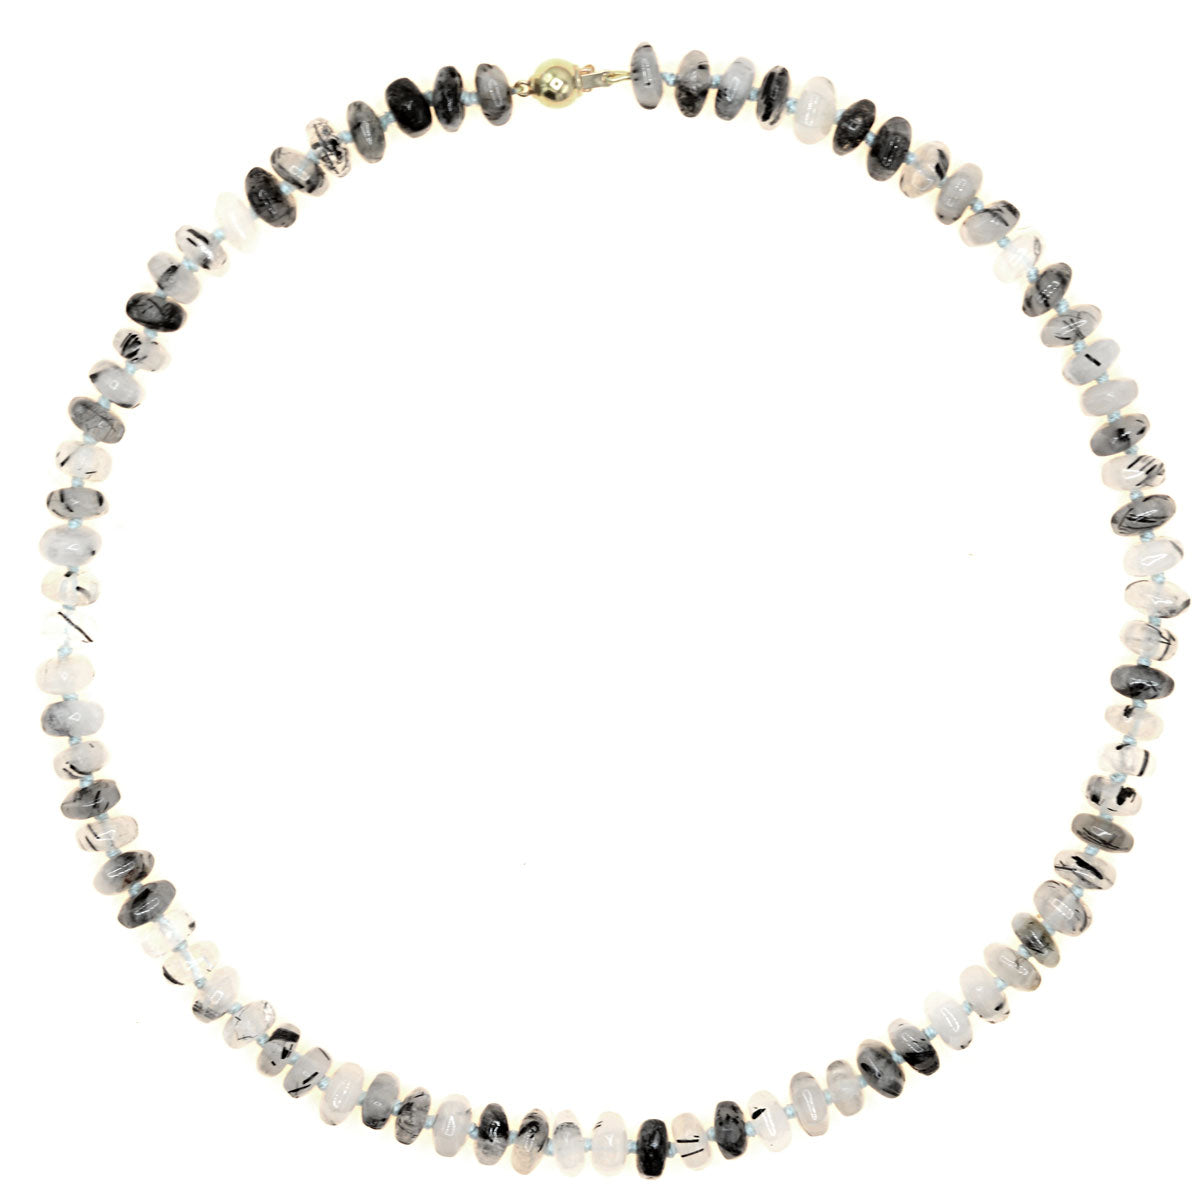 Beaded Black Tourmaline in Quartz Necklace